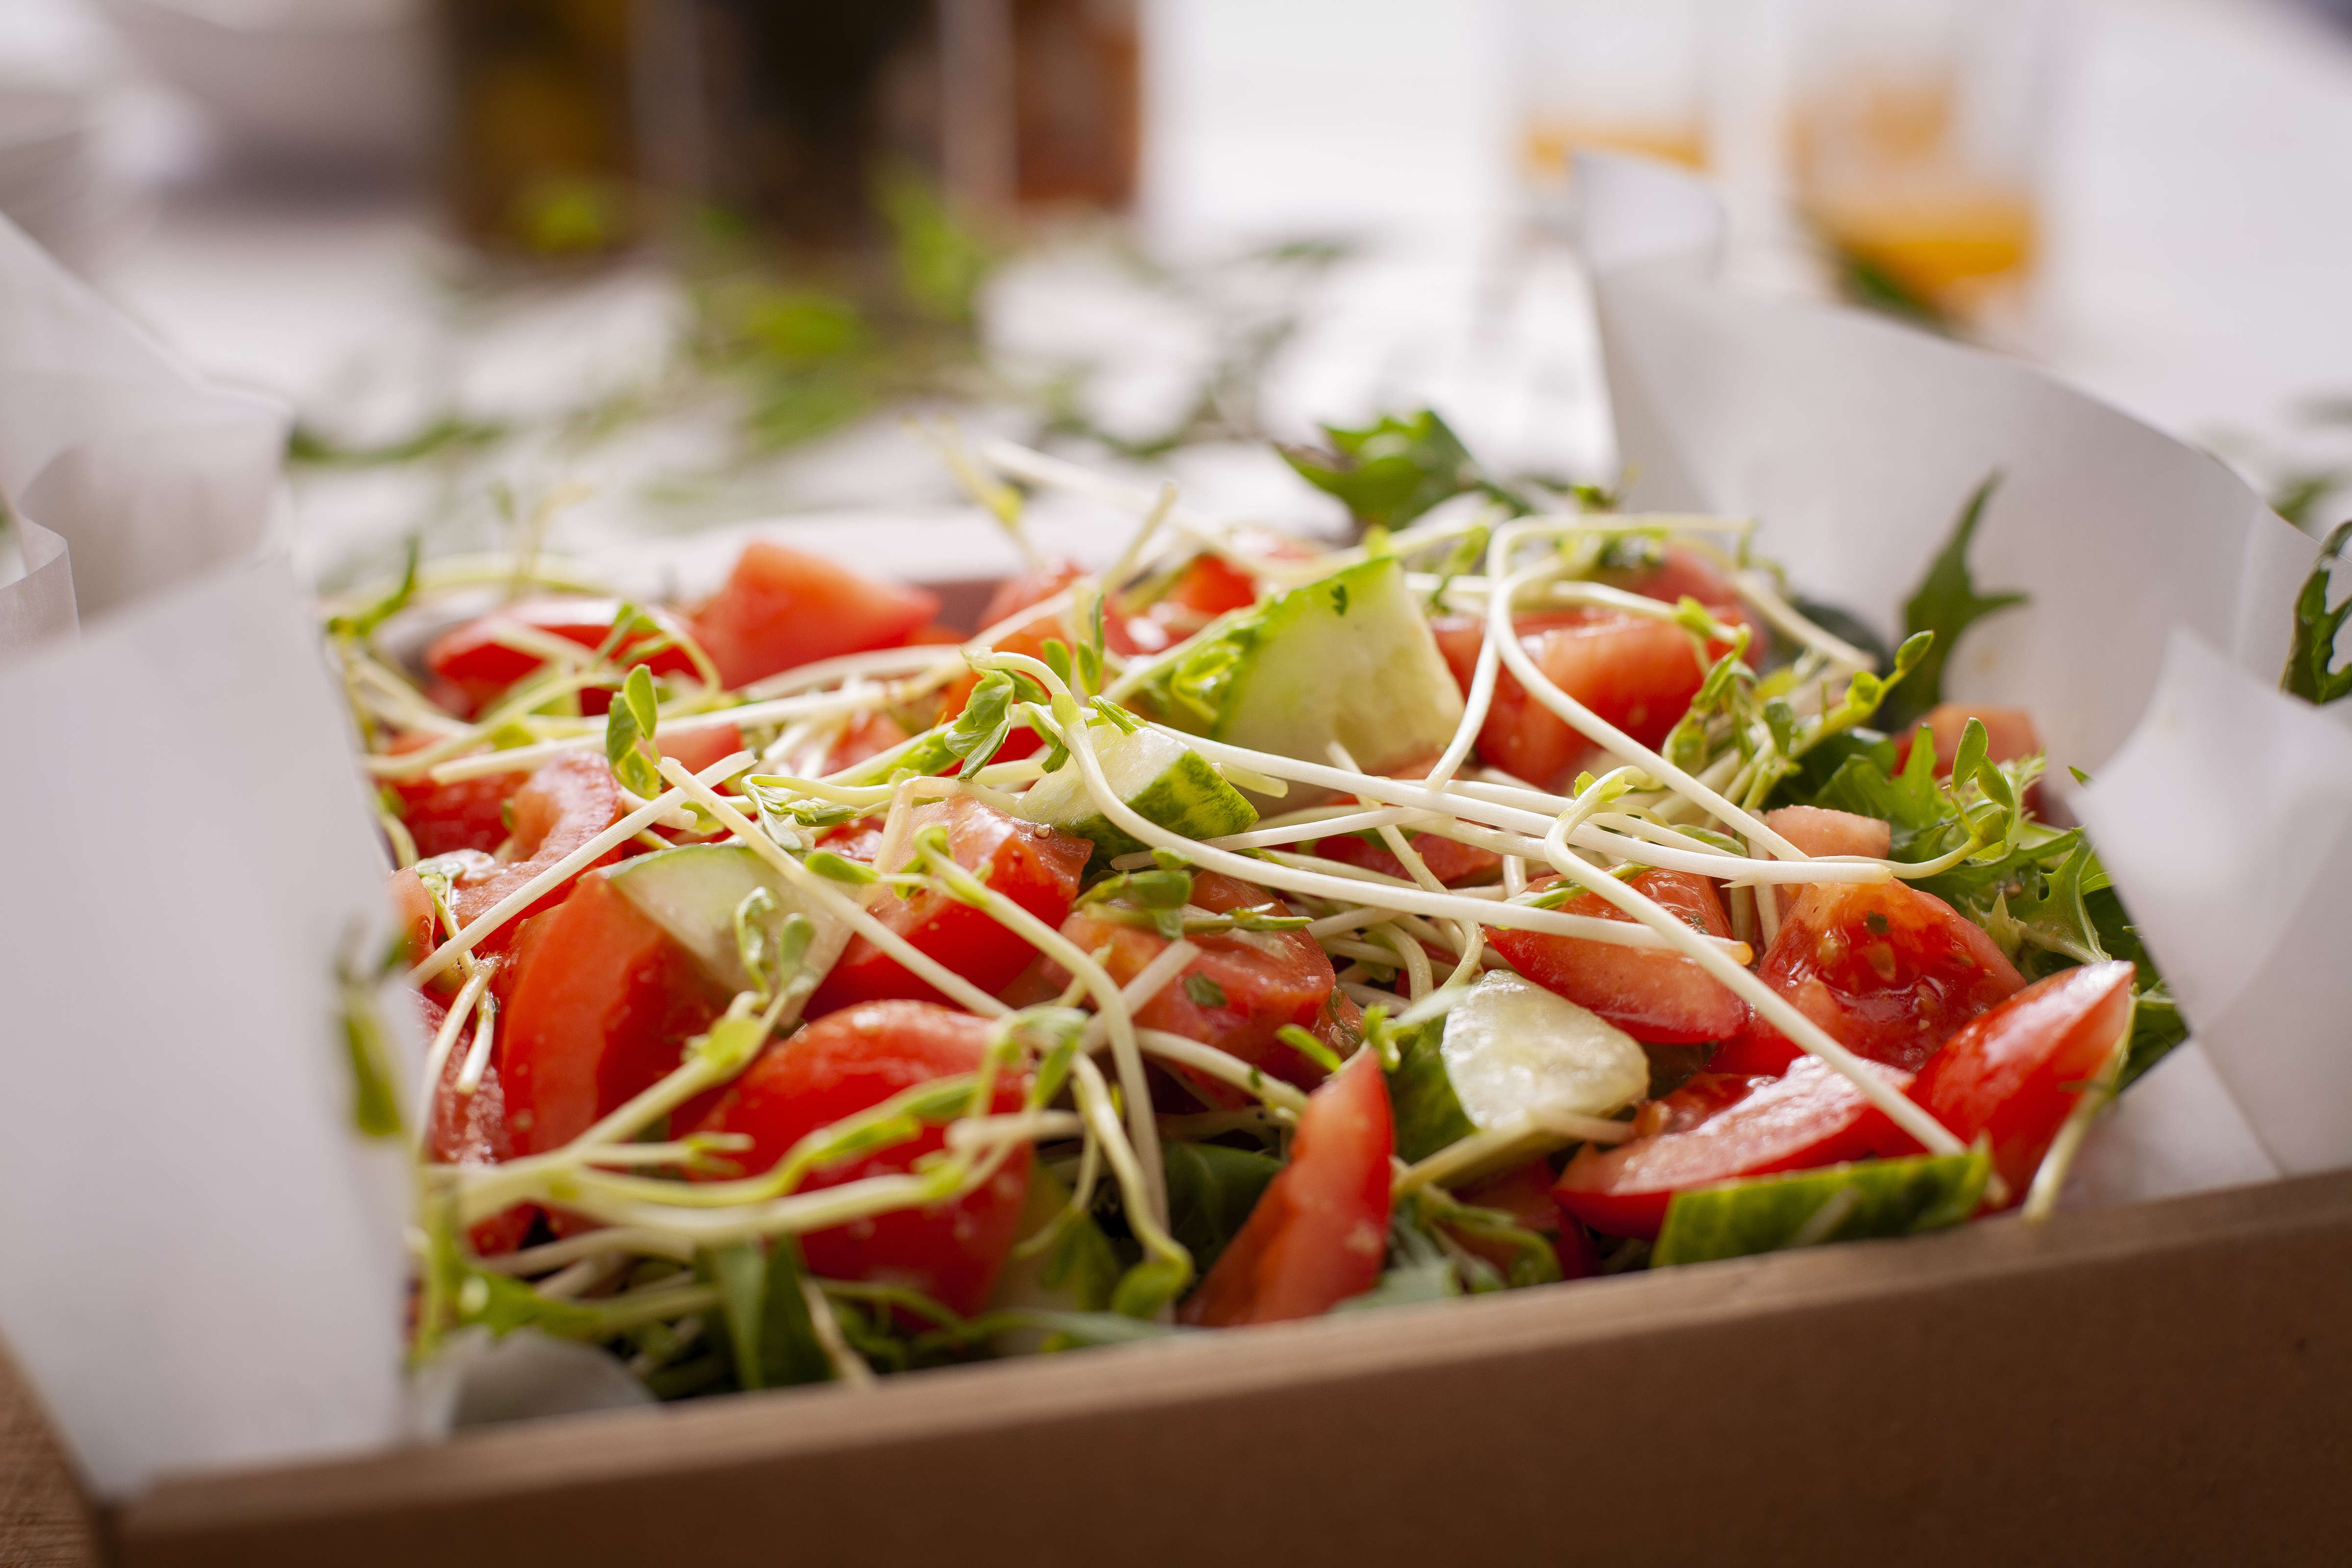 Garden salad catering box including lettuce, tomato, cucumber, and vinaigrette dressing. Photo: Richard Jupe.